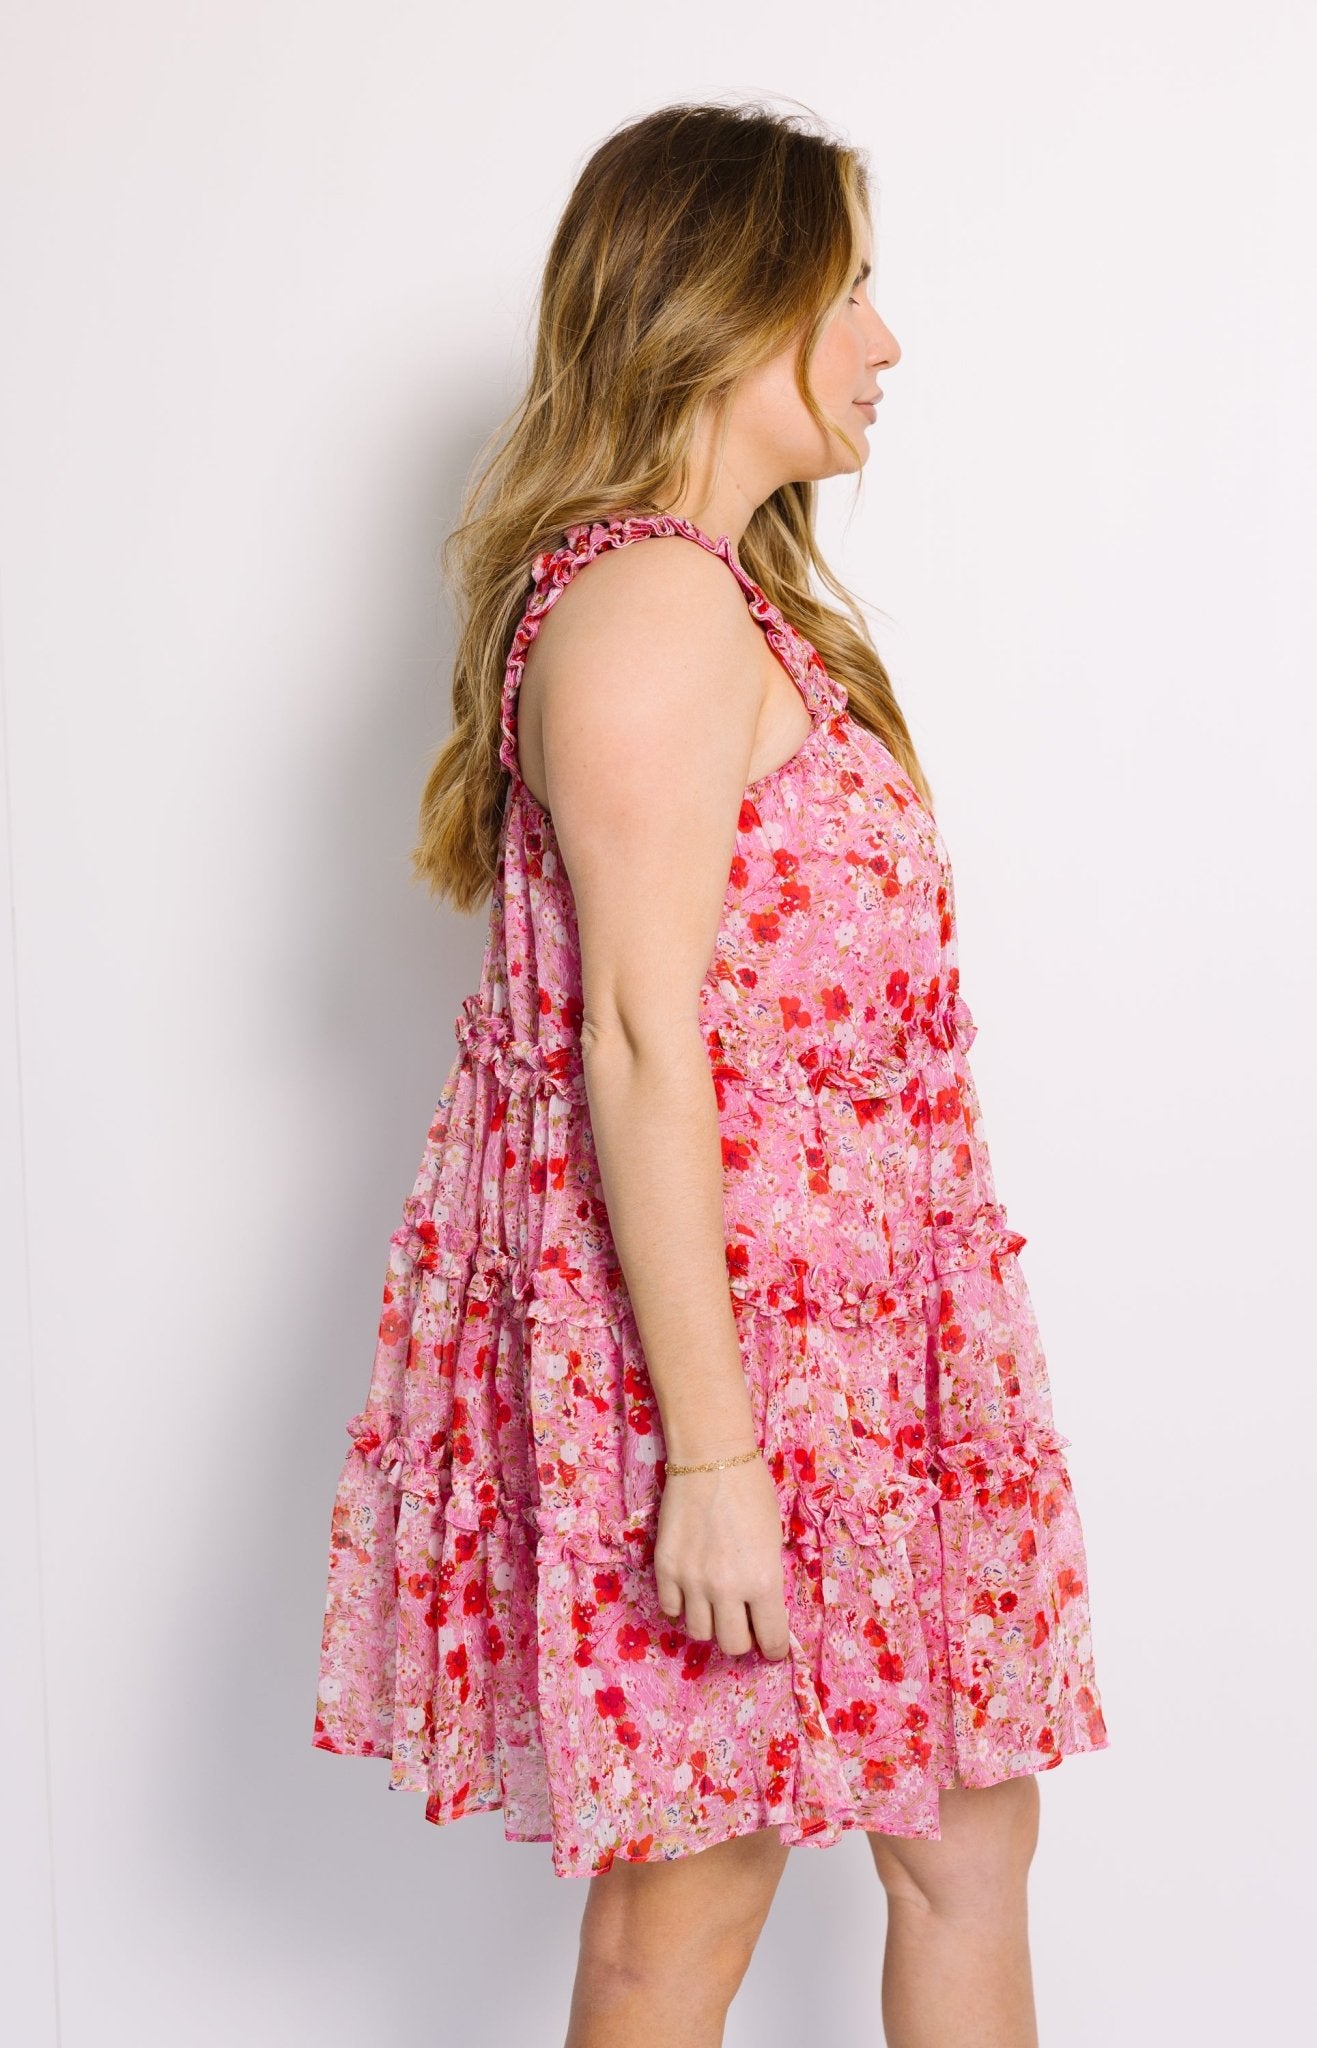 Endless Rose: Floral Chiffon Flounce Mini Dress Dresses Over $100 - 25